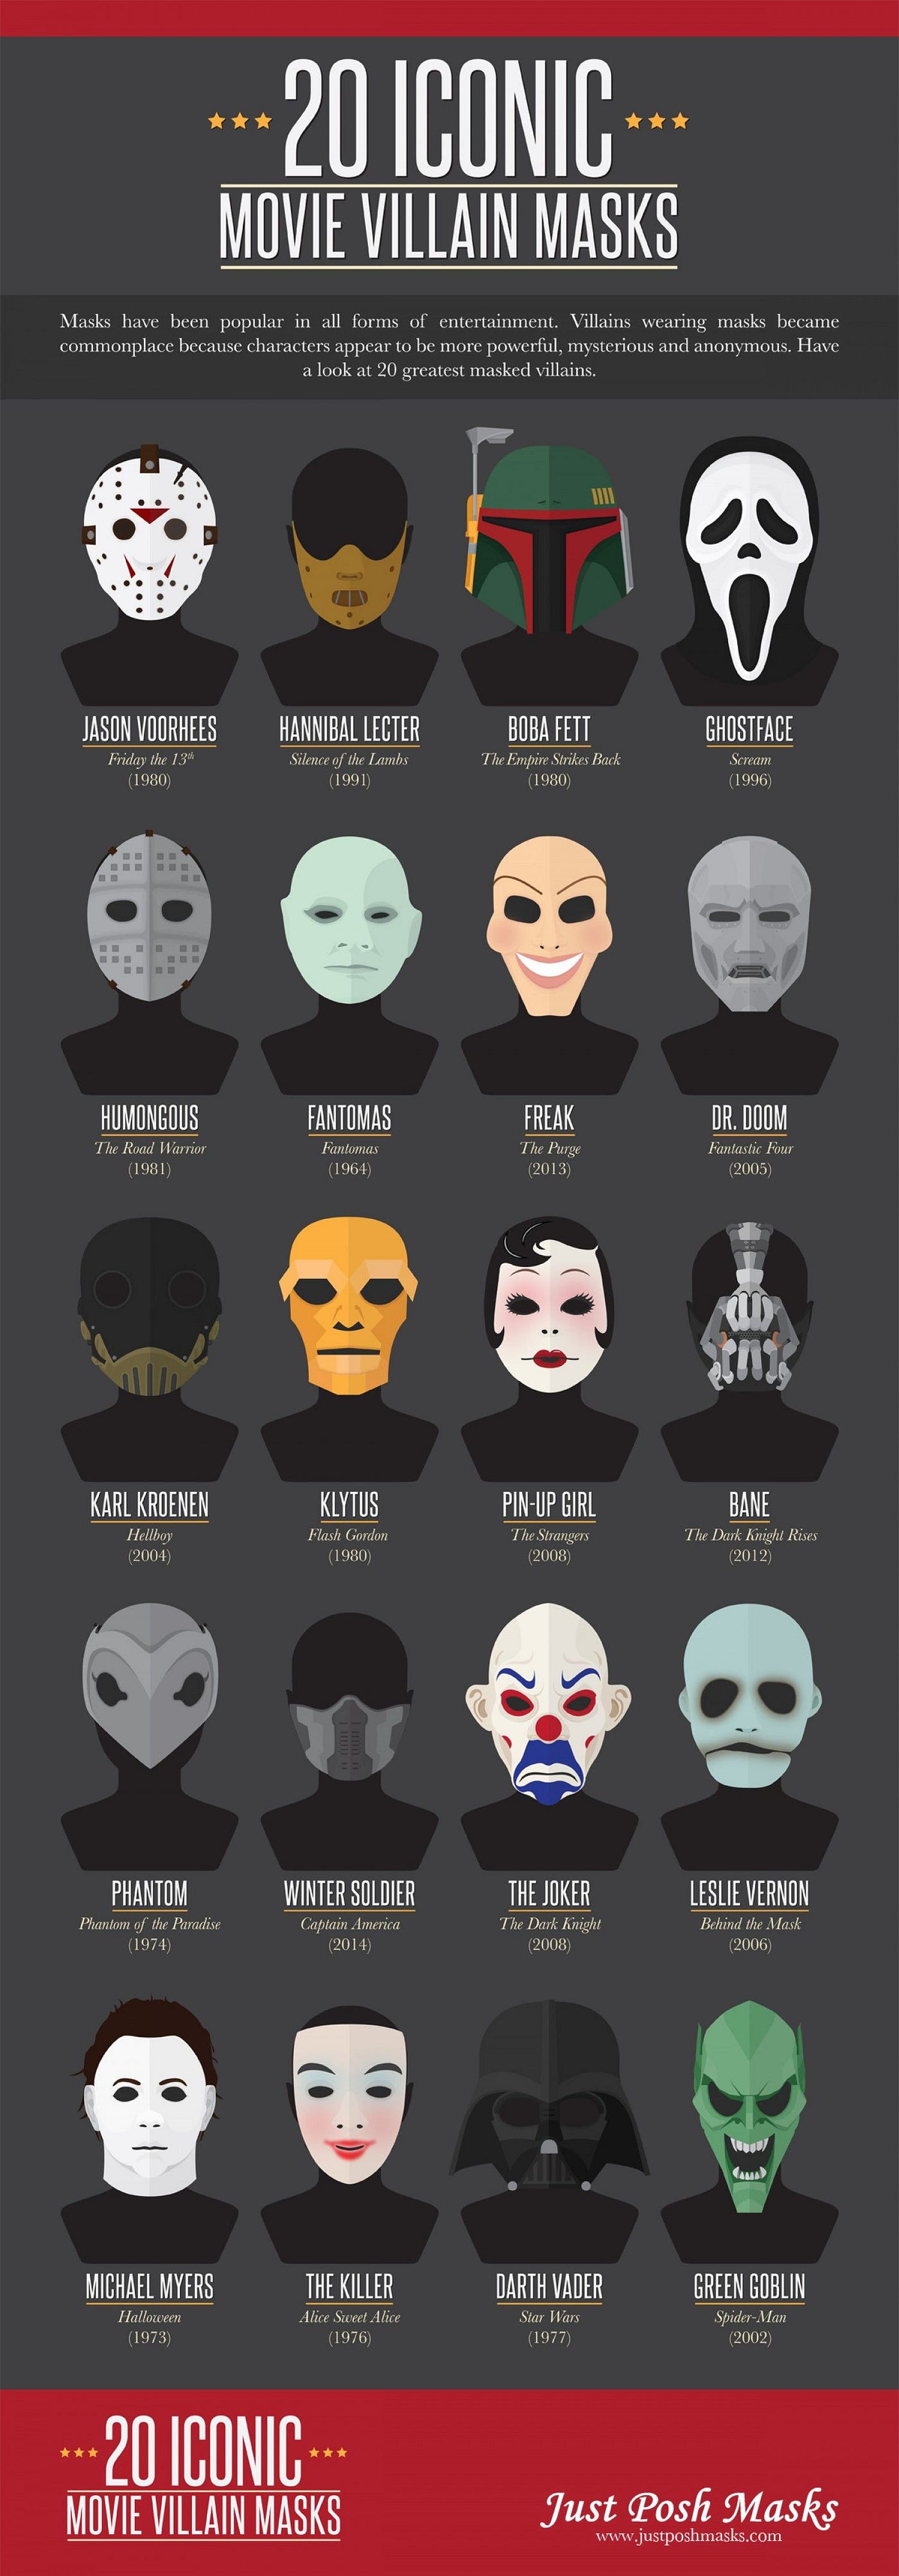 7 Famous Pop-Culture Masks You Will Love | by Amanda | Medium